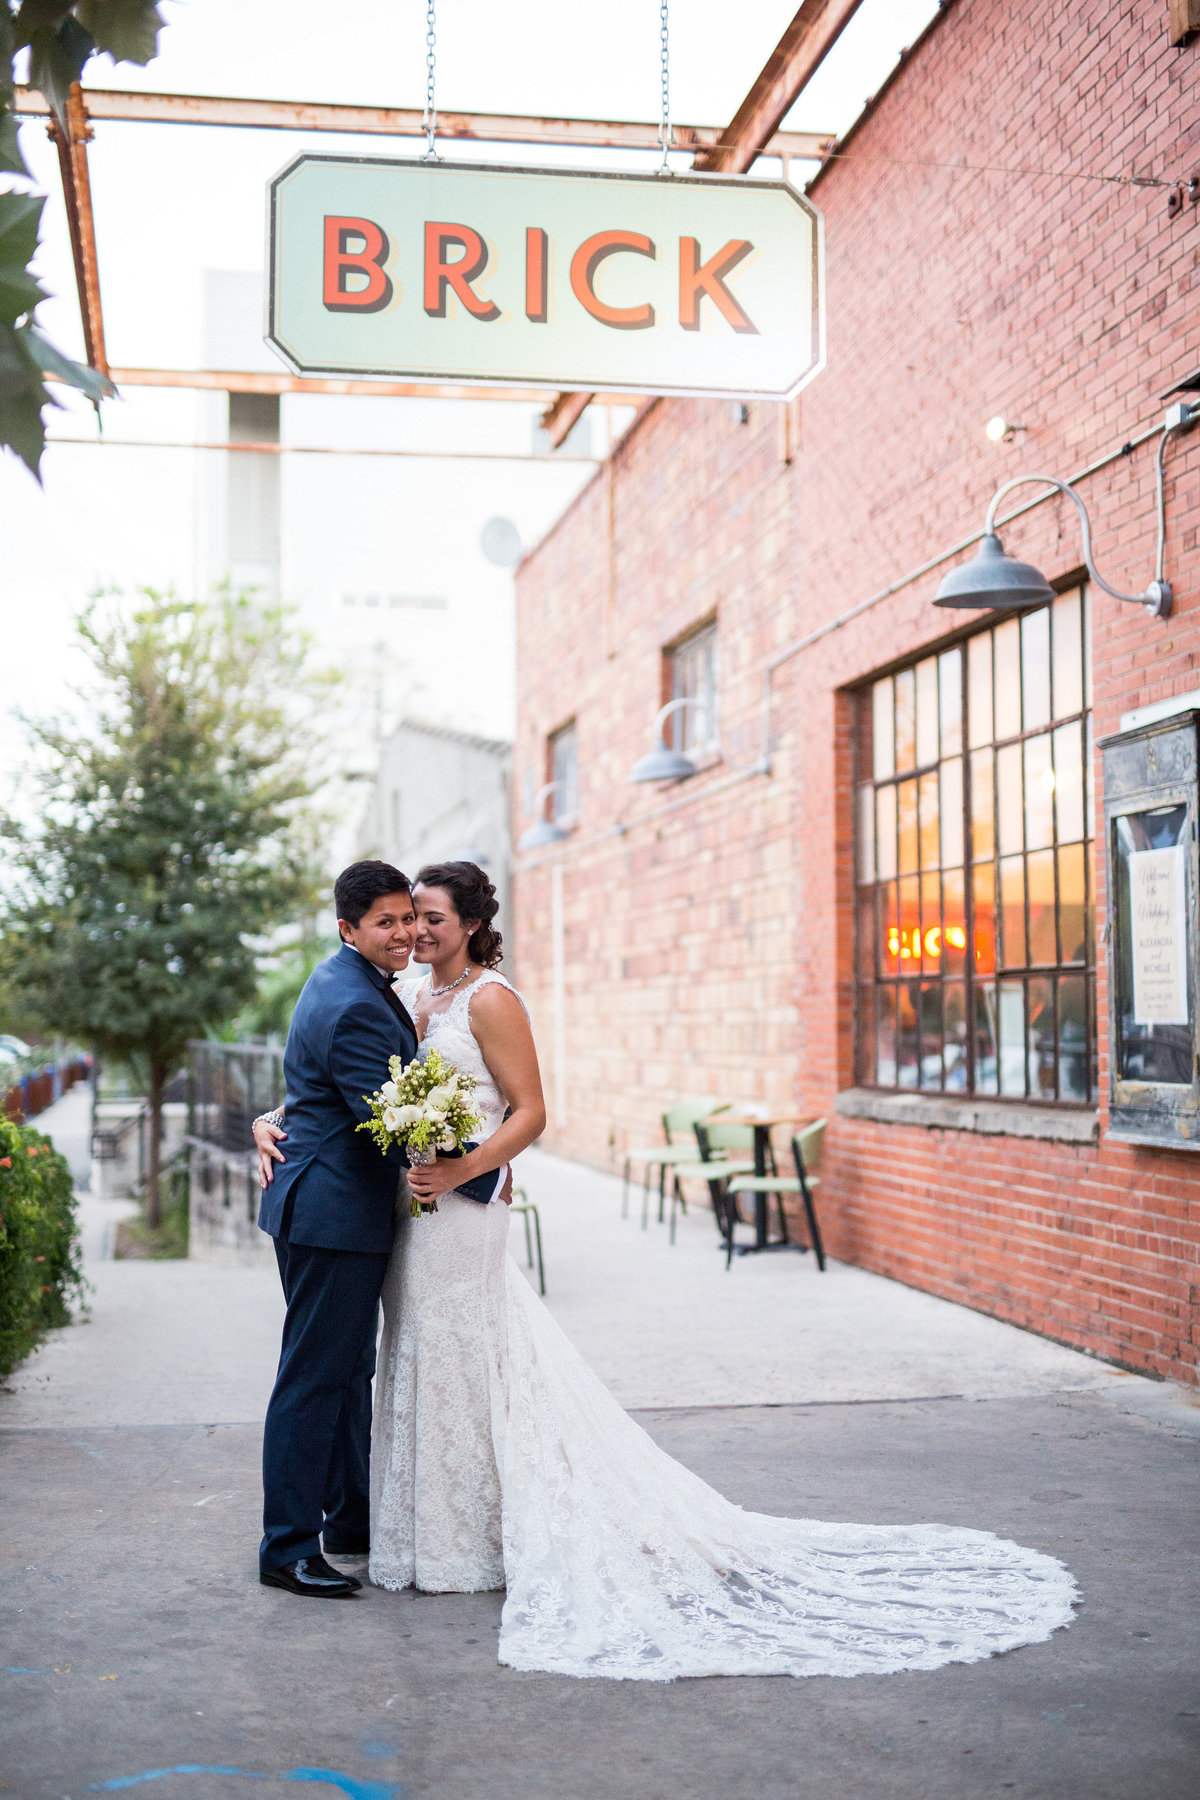 Married couple posing for San Antonio Wedding Photographer at Brick at Blue Star wedding venue